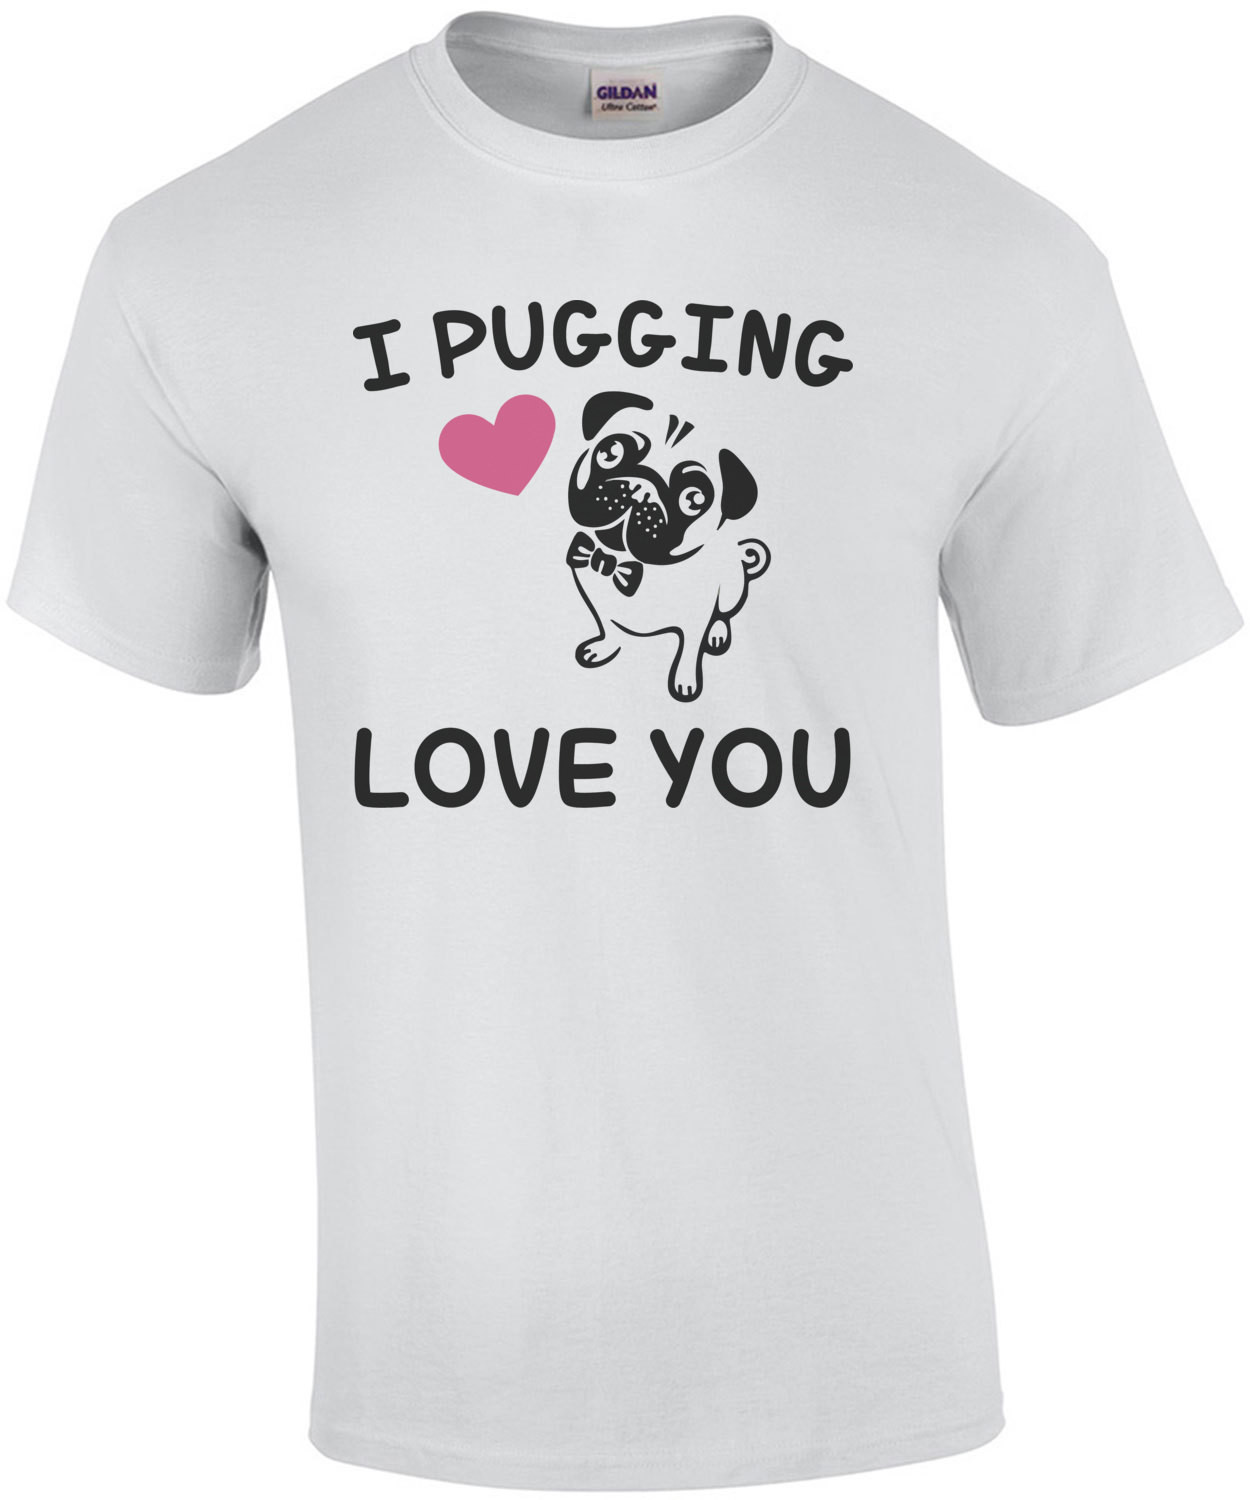 I pugging love you - Pug T-shirt